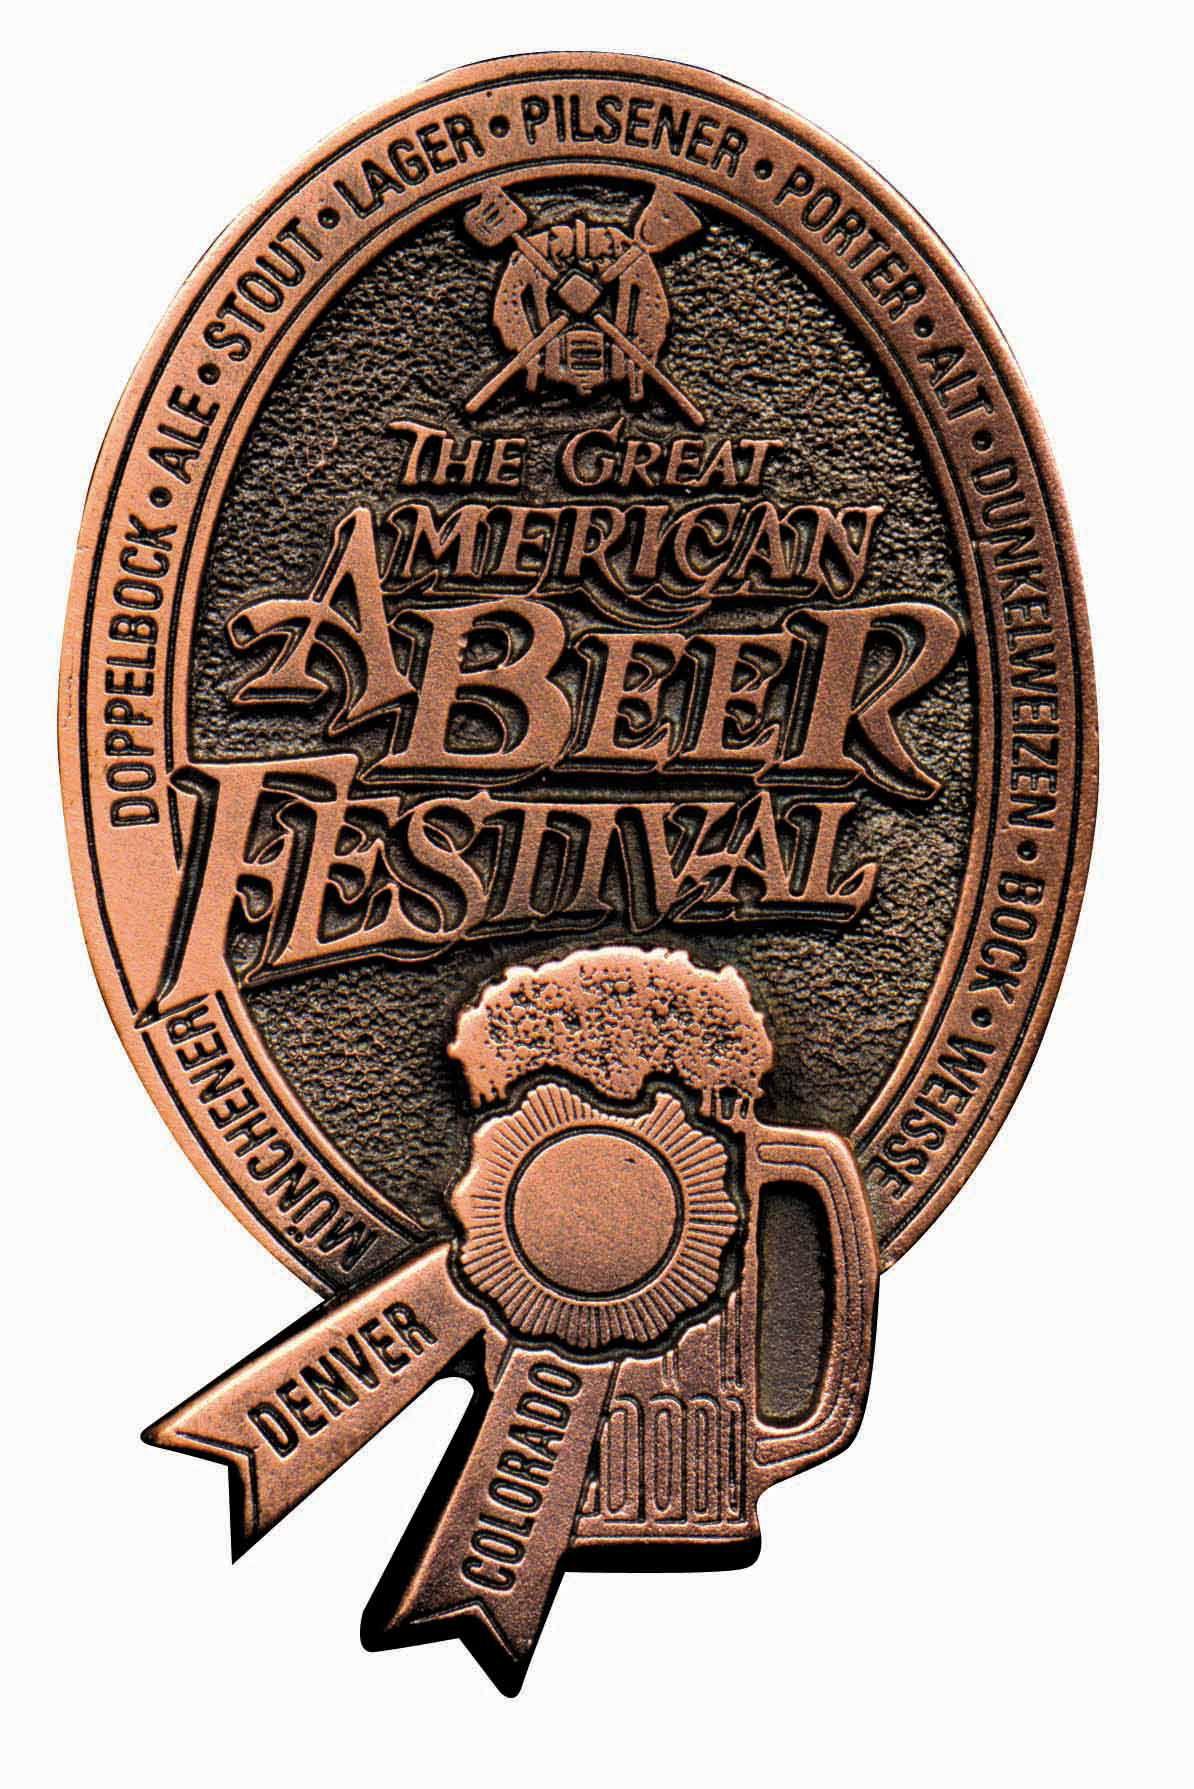 American Beer Logo - Promote Your Win American Beer Festival